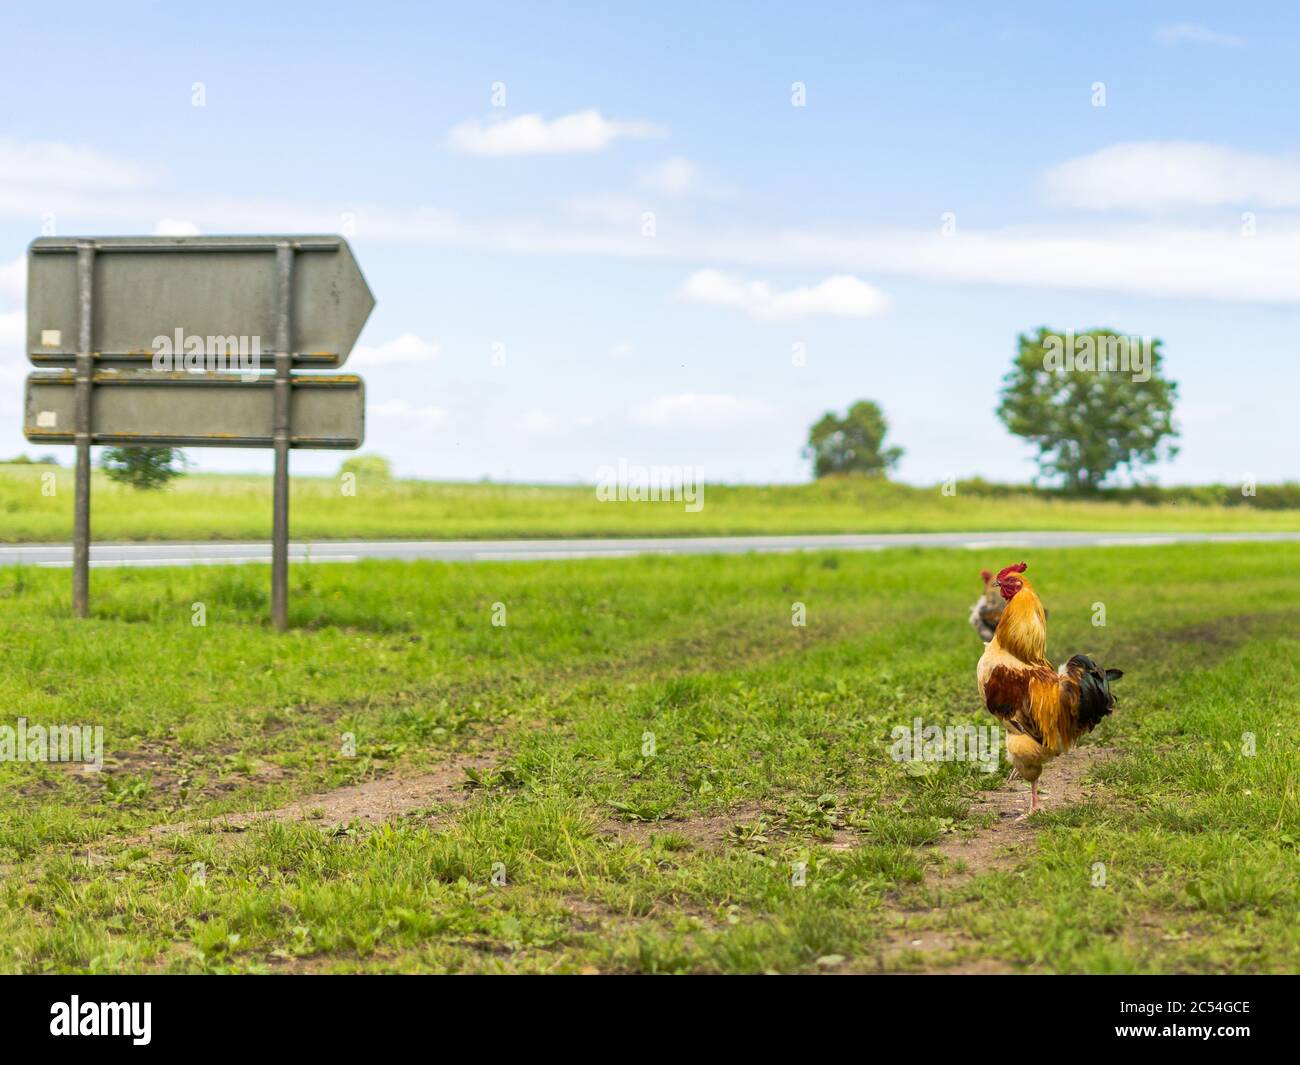 Chicken met on the road Stock Photo